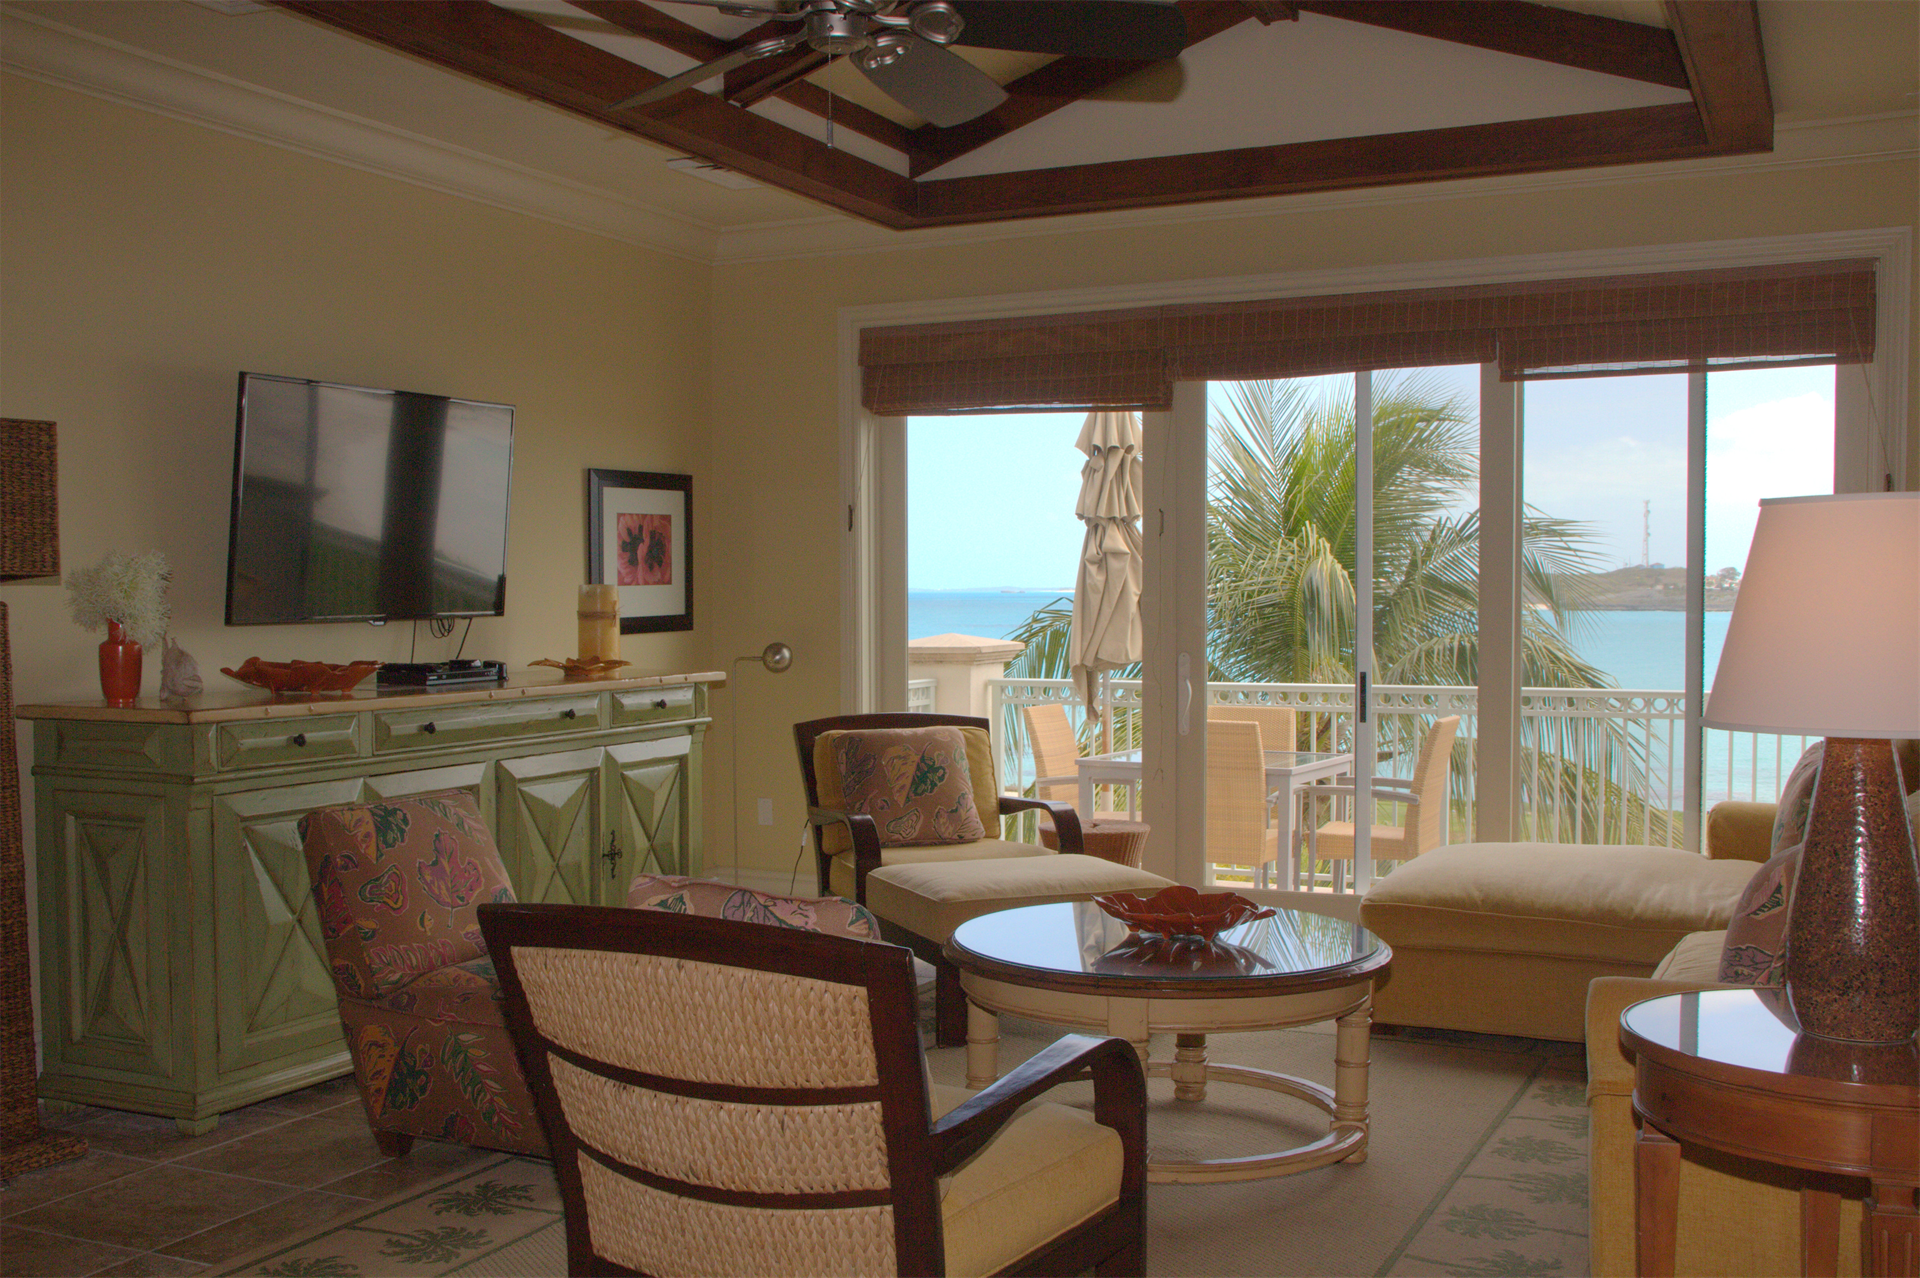 1. Condo / Townhome / Villa for Sale at Emerald Bay, Exuma Bahamas